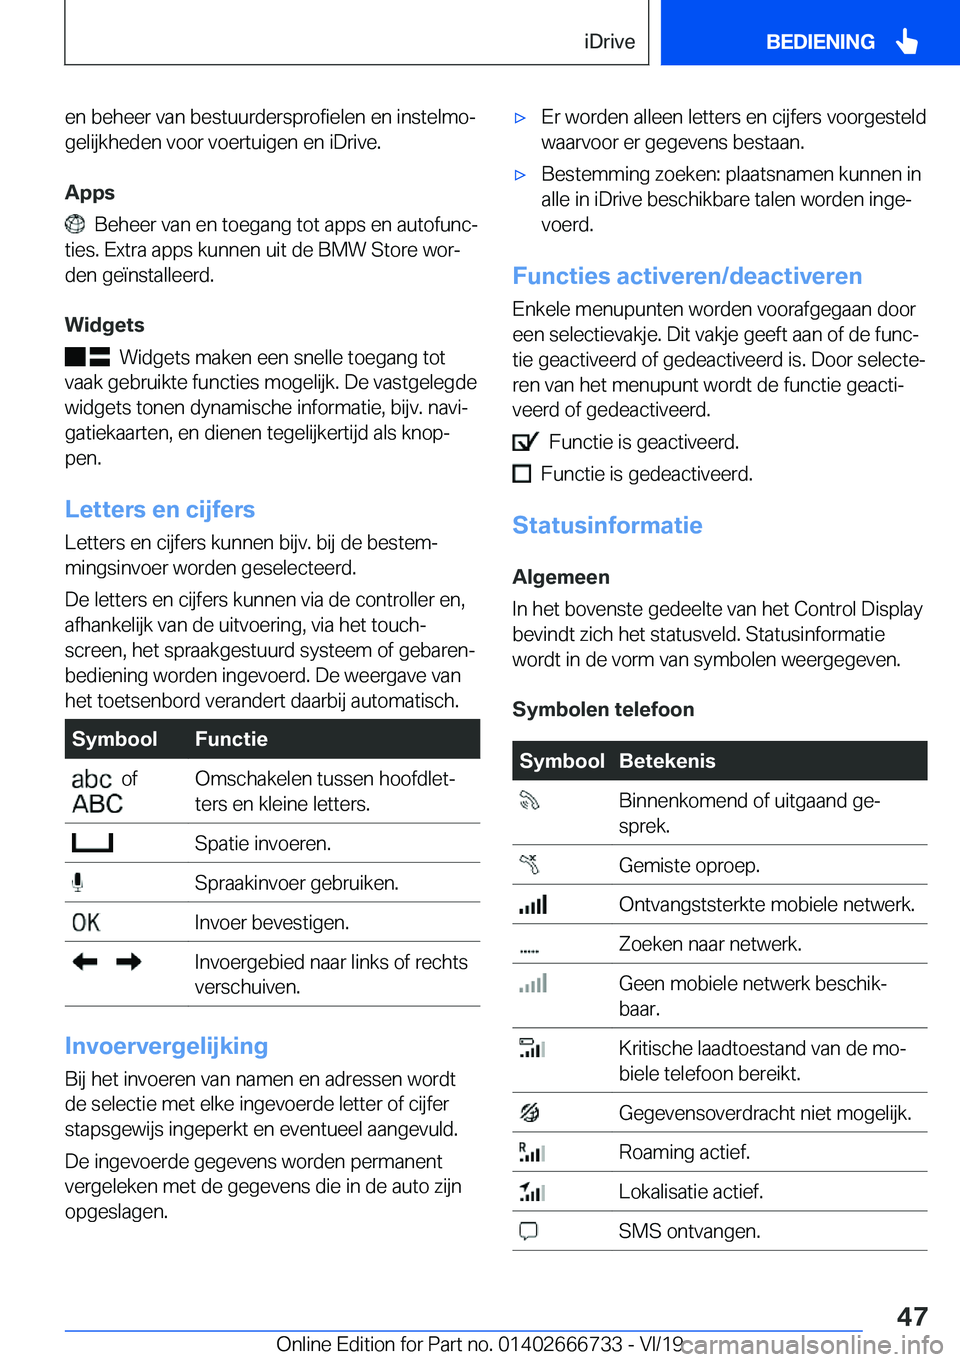 BMW M5 2020  Instructieboekjes (in Dutch) �e�n��b�e�h�e�e�r��v�a�n��b�e�s�t�u�u�r�d�e�r�s�p�r�o�f�i�e�l�e�n��e�n��i�n�s�t�e�l�m�oj�g�e�l�i�j�k�h�e�d�e�n��v�o�o�r��v�o�e�r�t�u�i�g�e�n��e�n��i�D�r�i�v�e�.
�A�p�p�s
���B�e�h�e�e�r��v